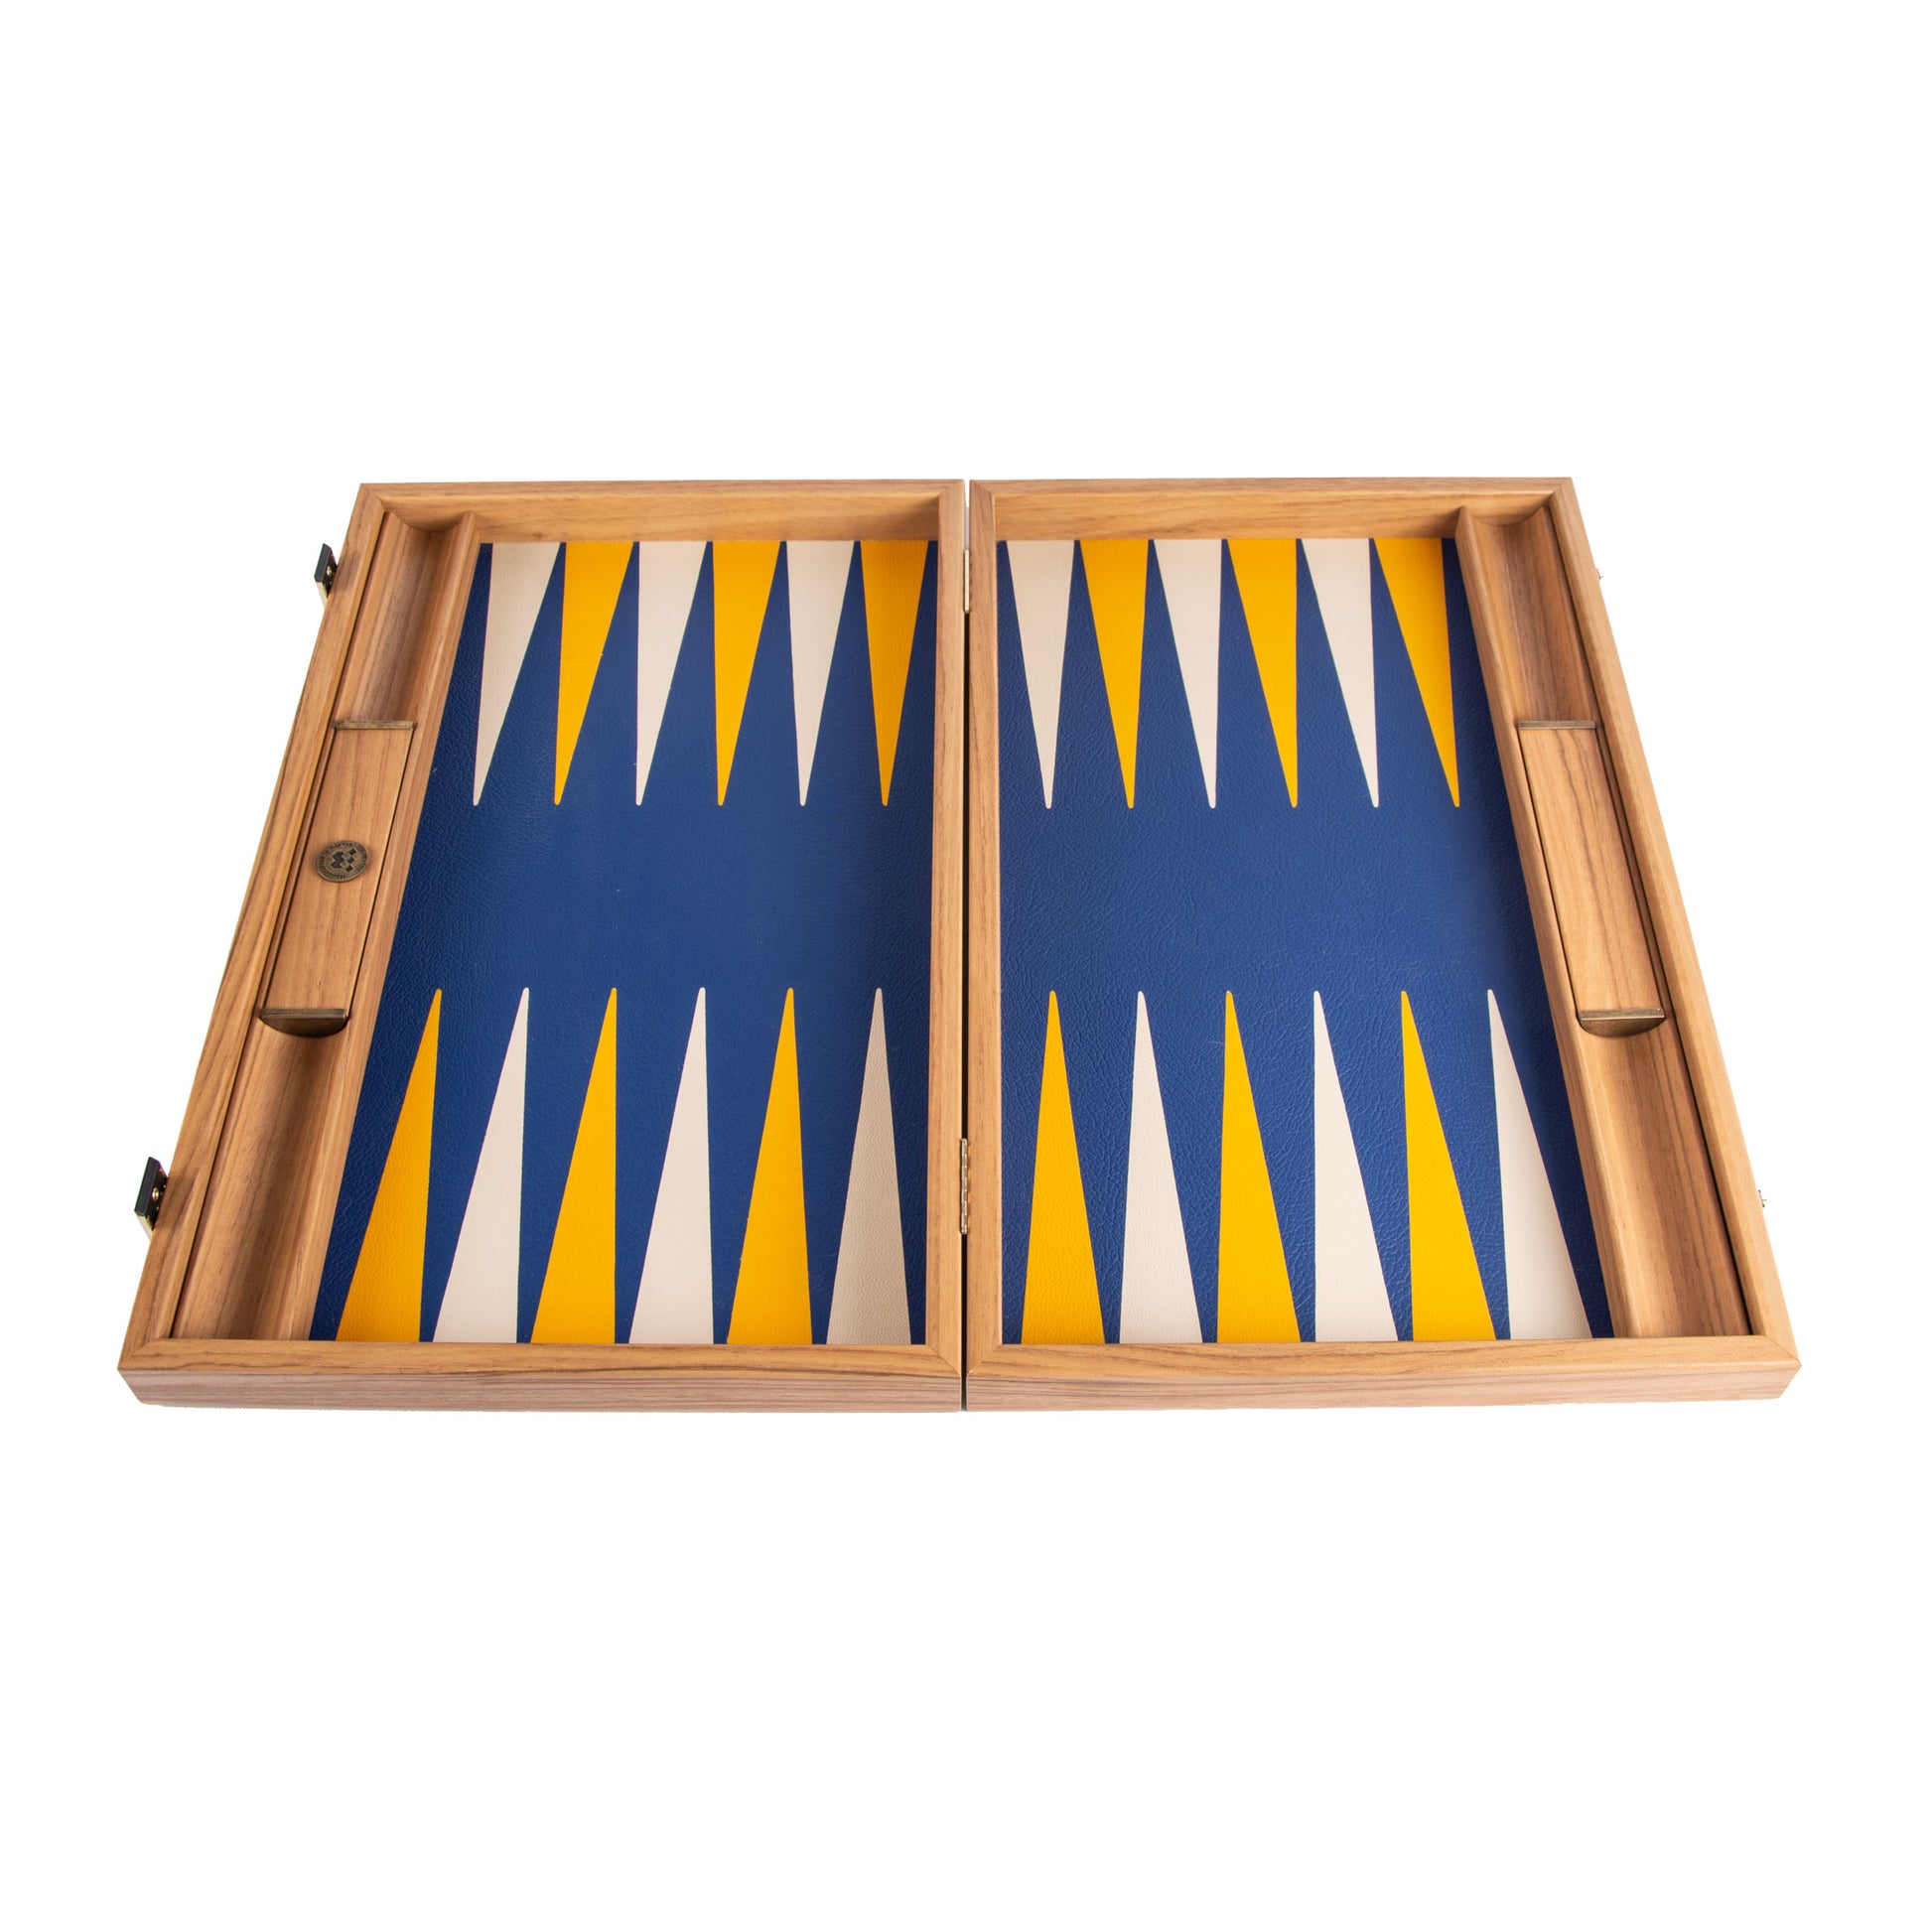 Premium Leatherette Royal Blue Backgammon Set - Premium Backgammon from MANOPOULOS Chess & Backgammon - Just €175! Shop now at MANOPOULOS Chess & Backgammon